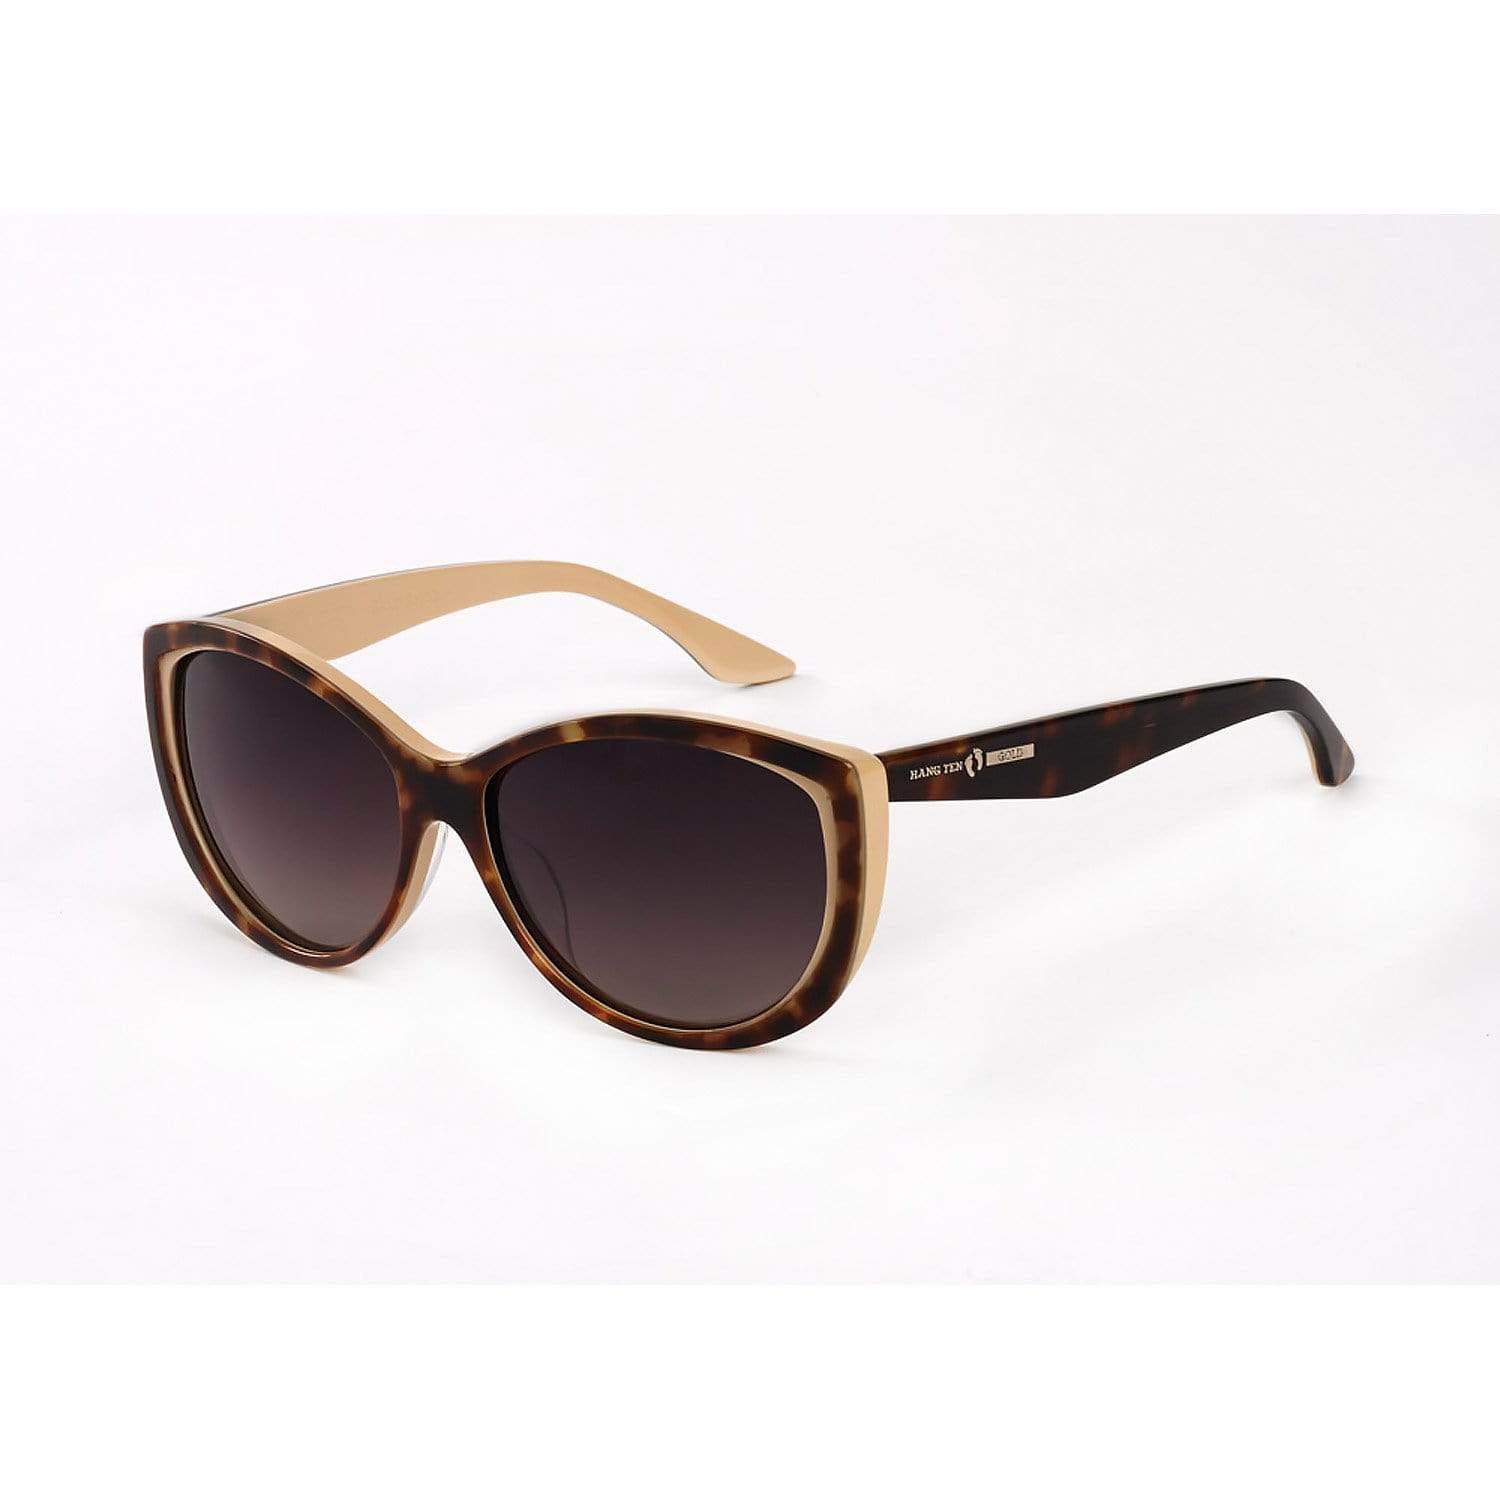 Hang Ten Gold Apparel : Eyewear - Sunglasses Hang Ten Gold The Beach Boutique-Sandy Beach/Brown Lens